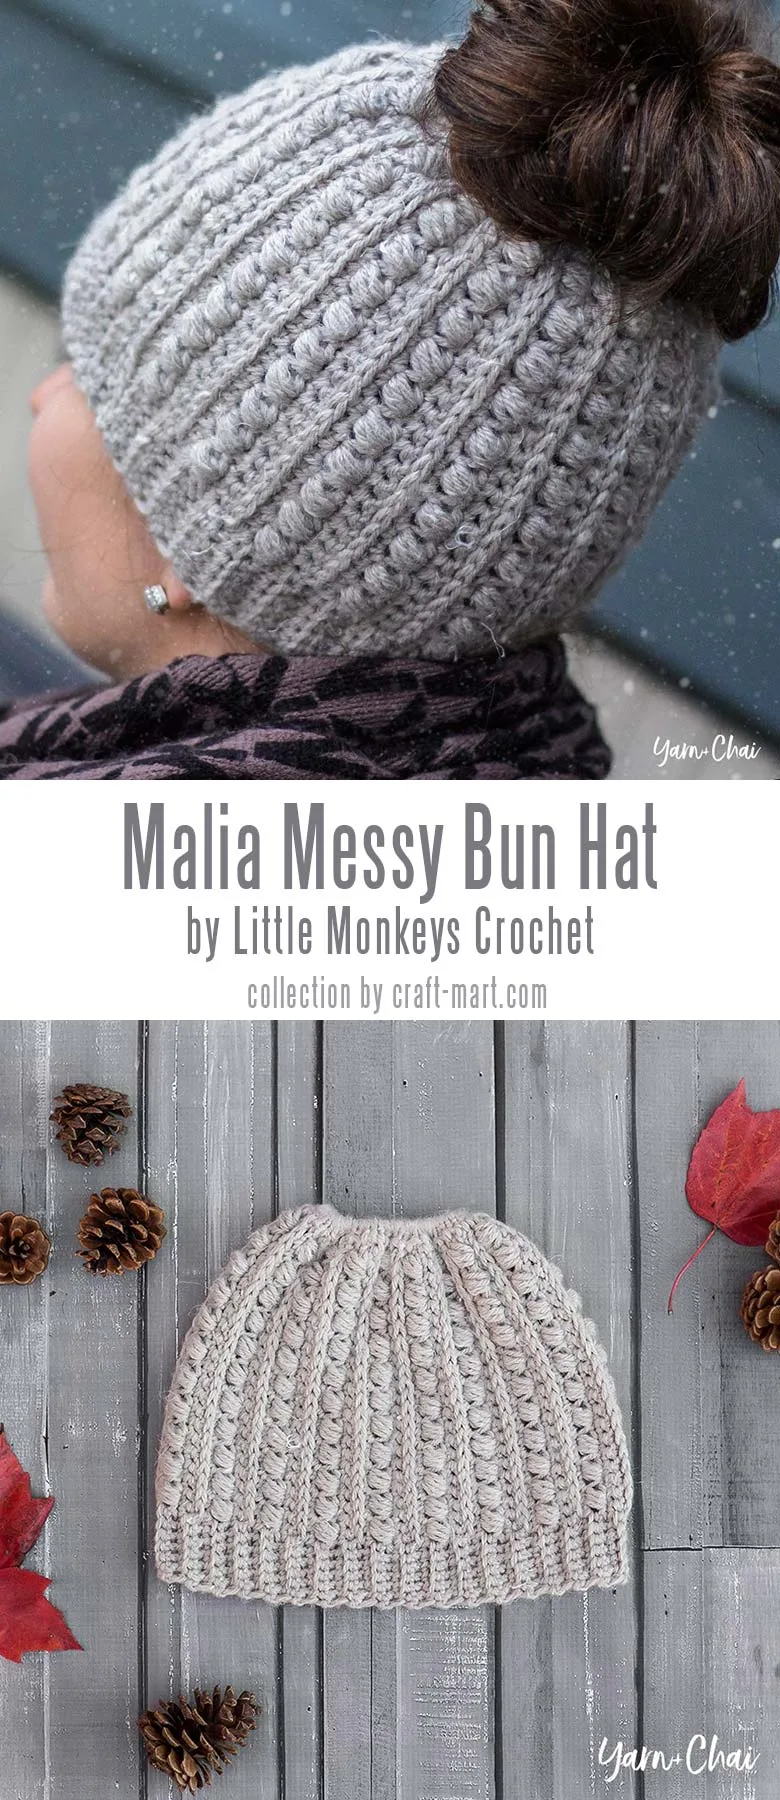 https://craft-mart.com/wp-content/uploads/2019/11/8_MaliaMessyBunBeanie_collection-by-craft-mart.jpg.webp